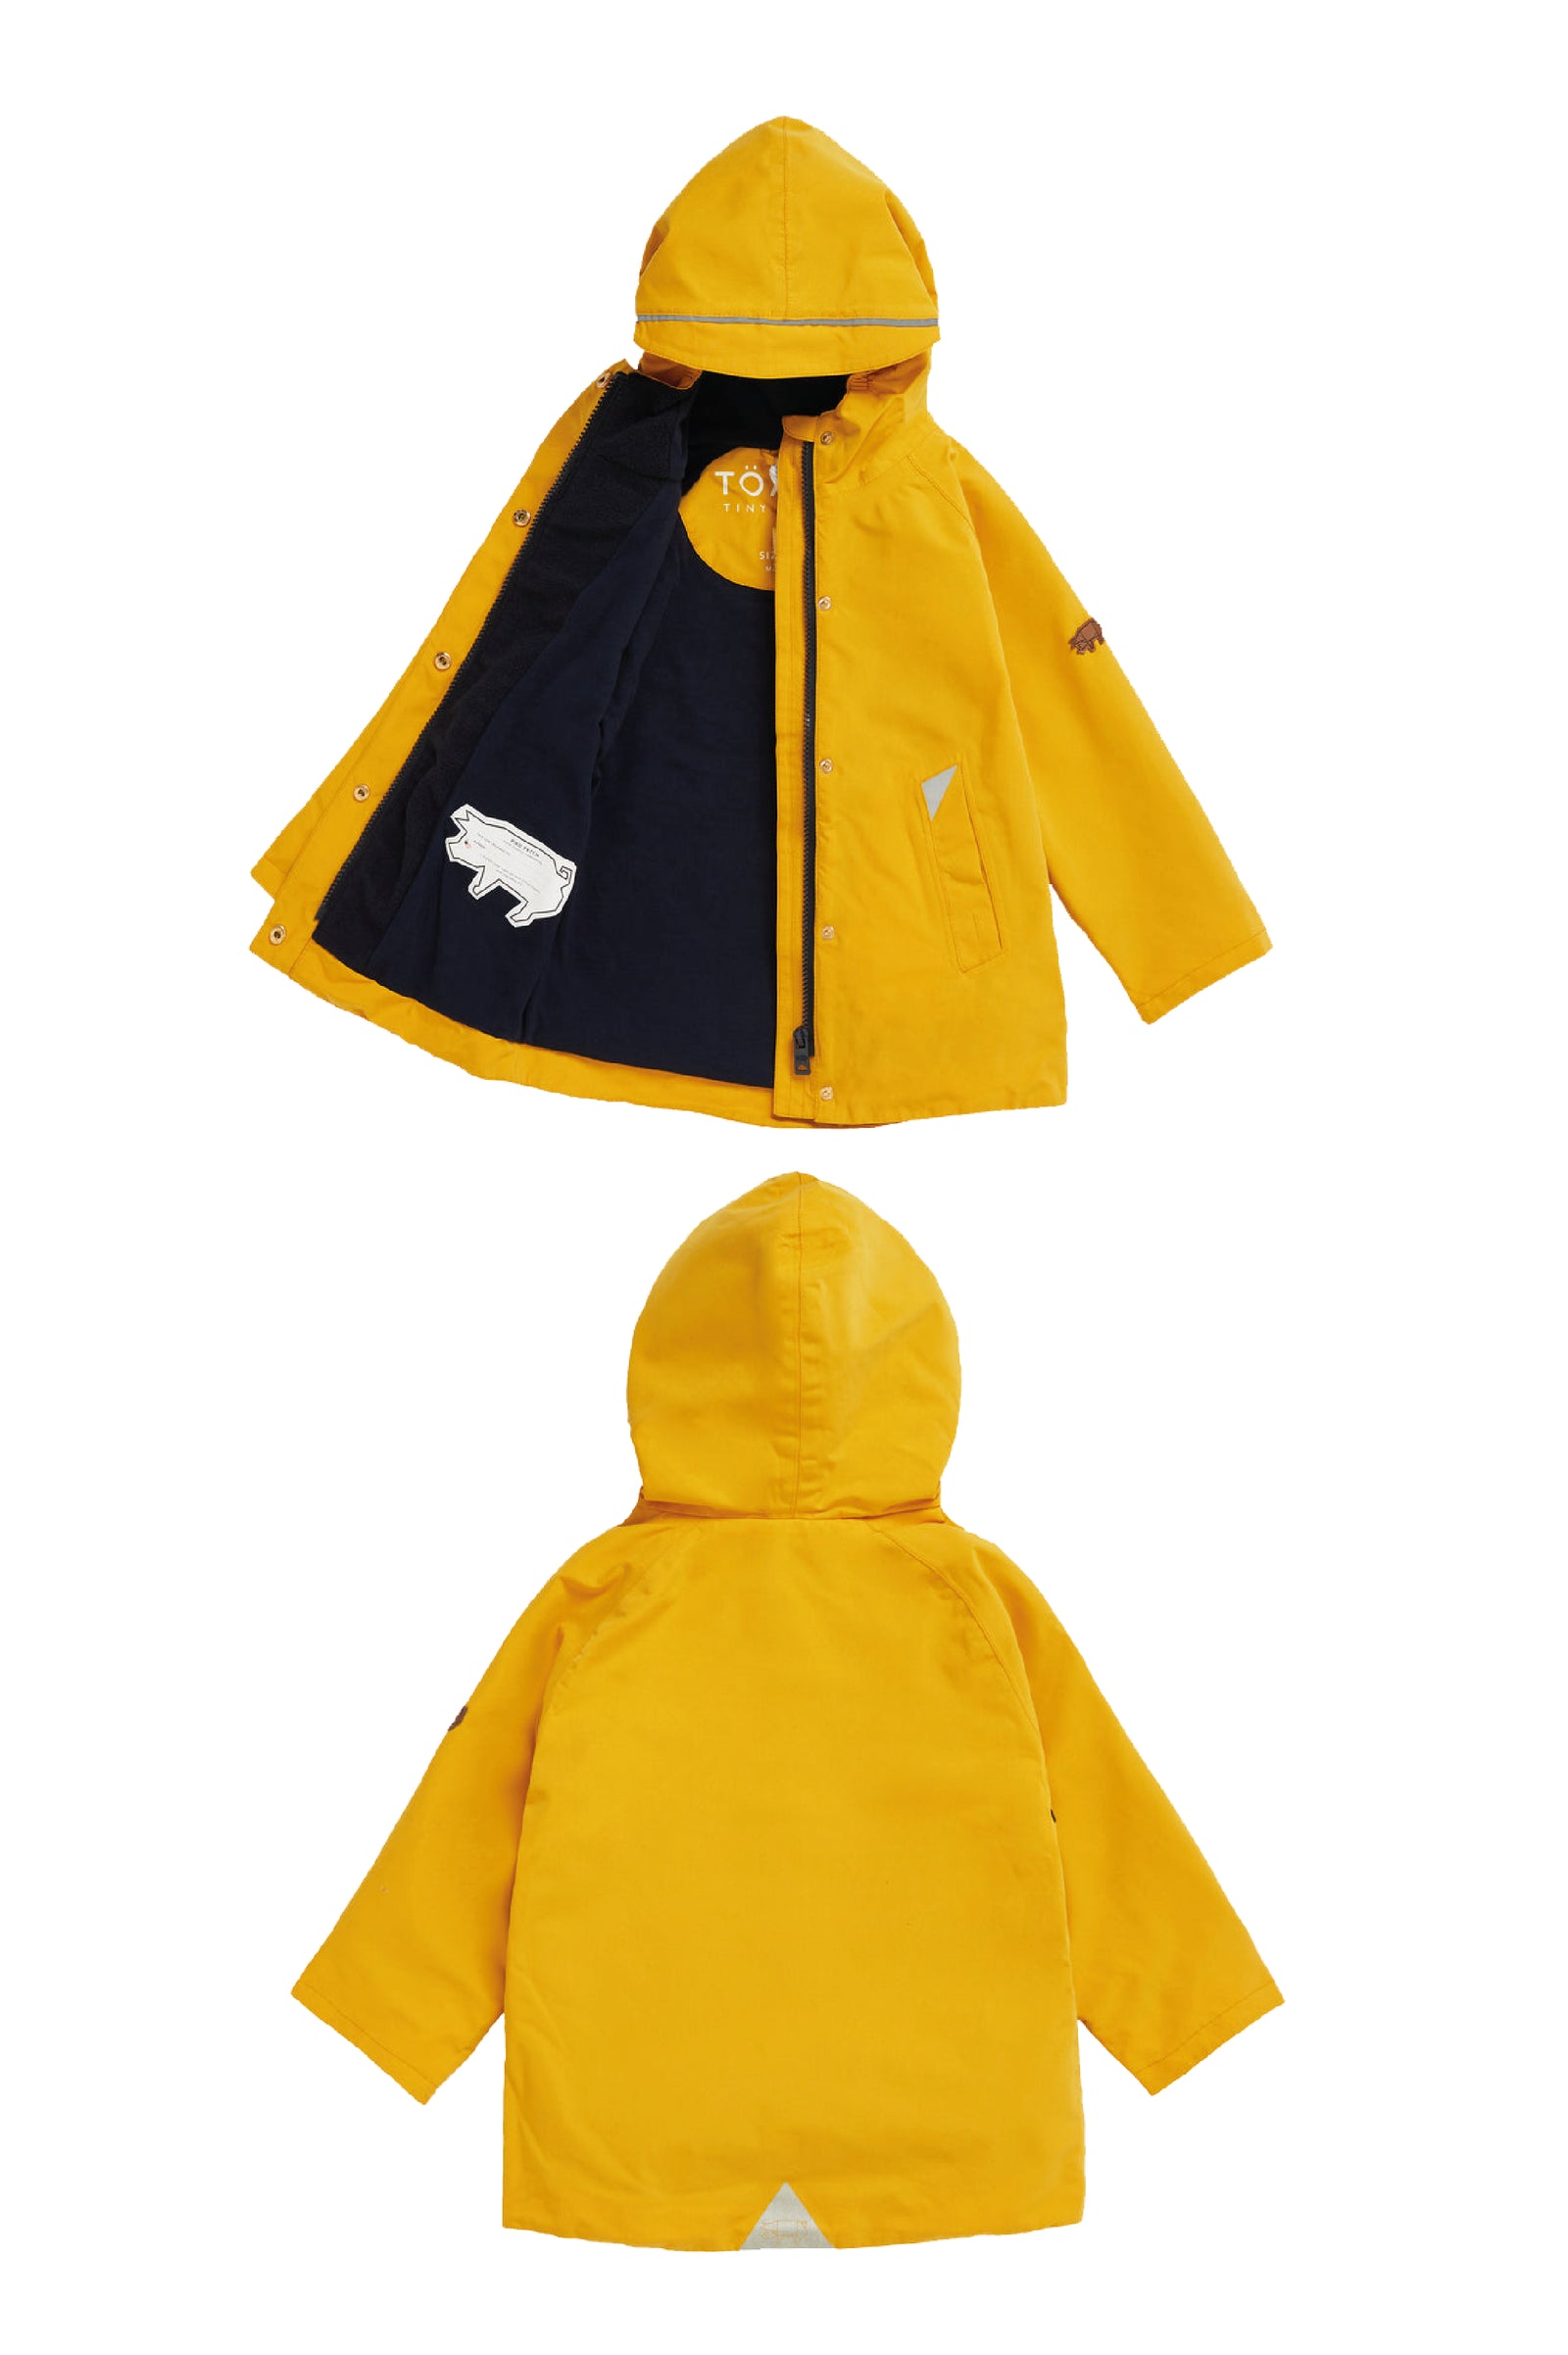 Fisherman Yellow Waterproof Raincoat